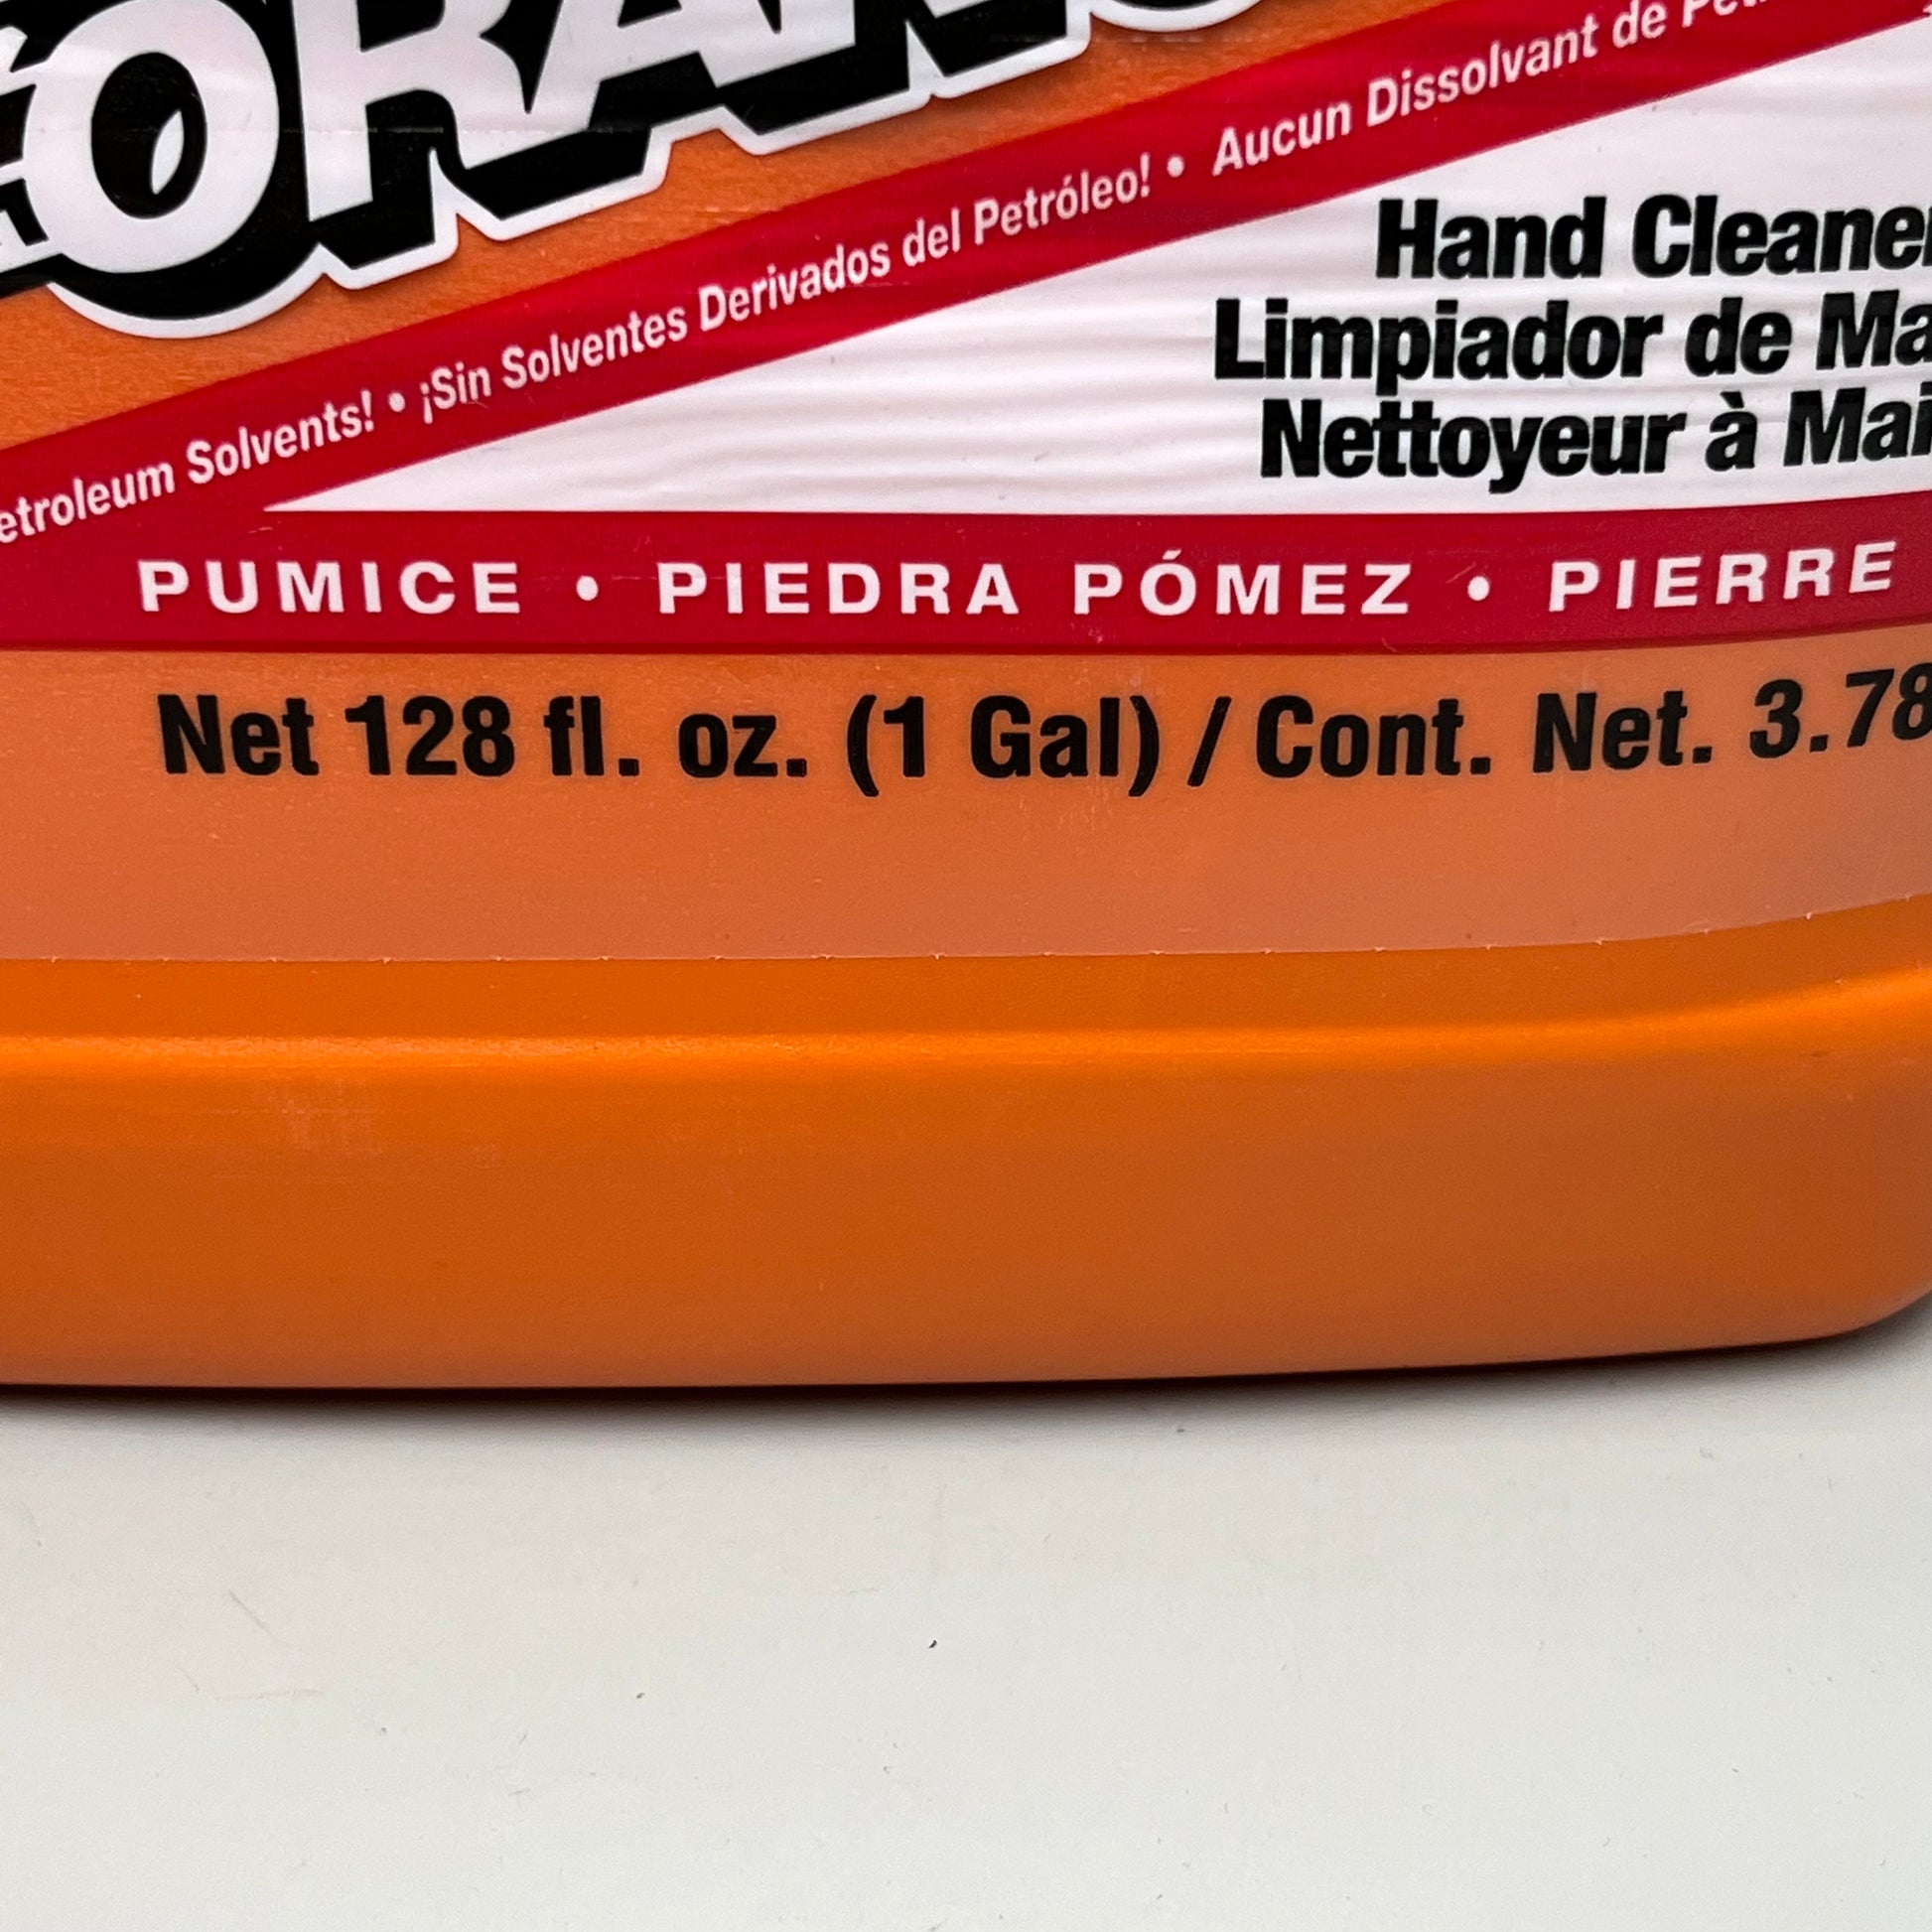 ZA@ MICROGEL Fast Orange Hand Cleaner 128oz 1 gallon Pumice Lotion (Ne –  PayWut